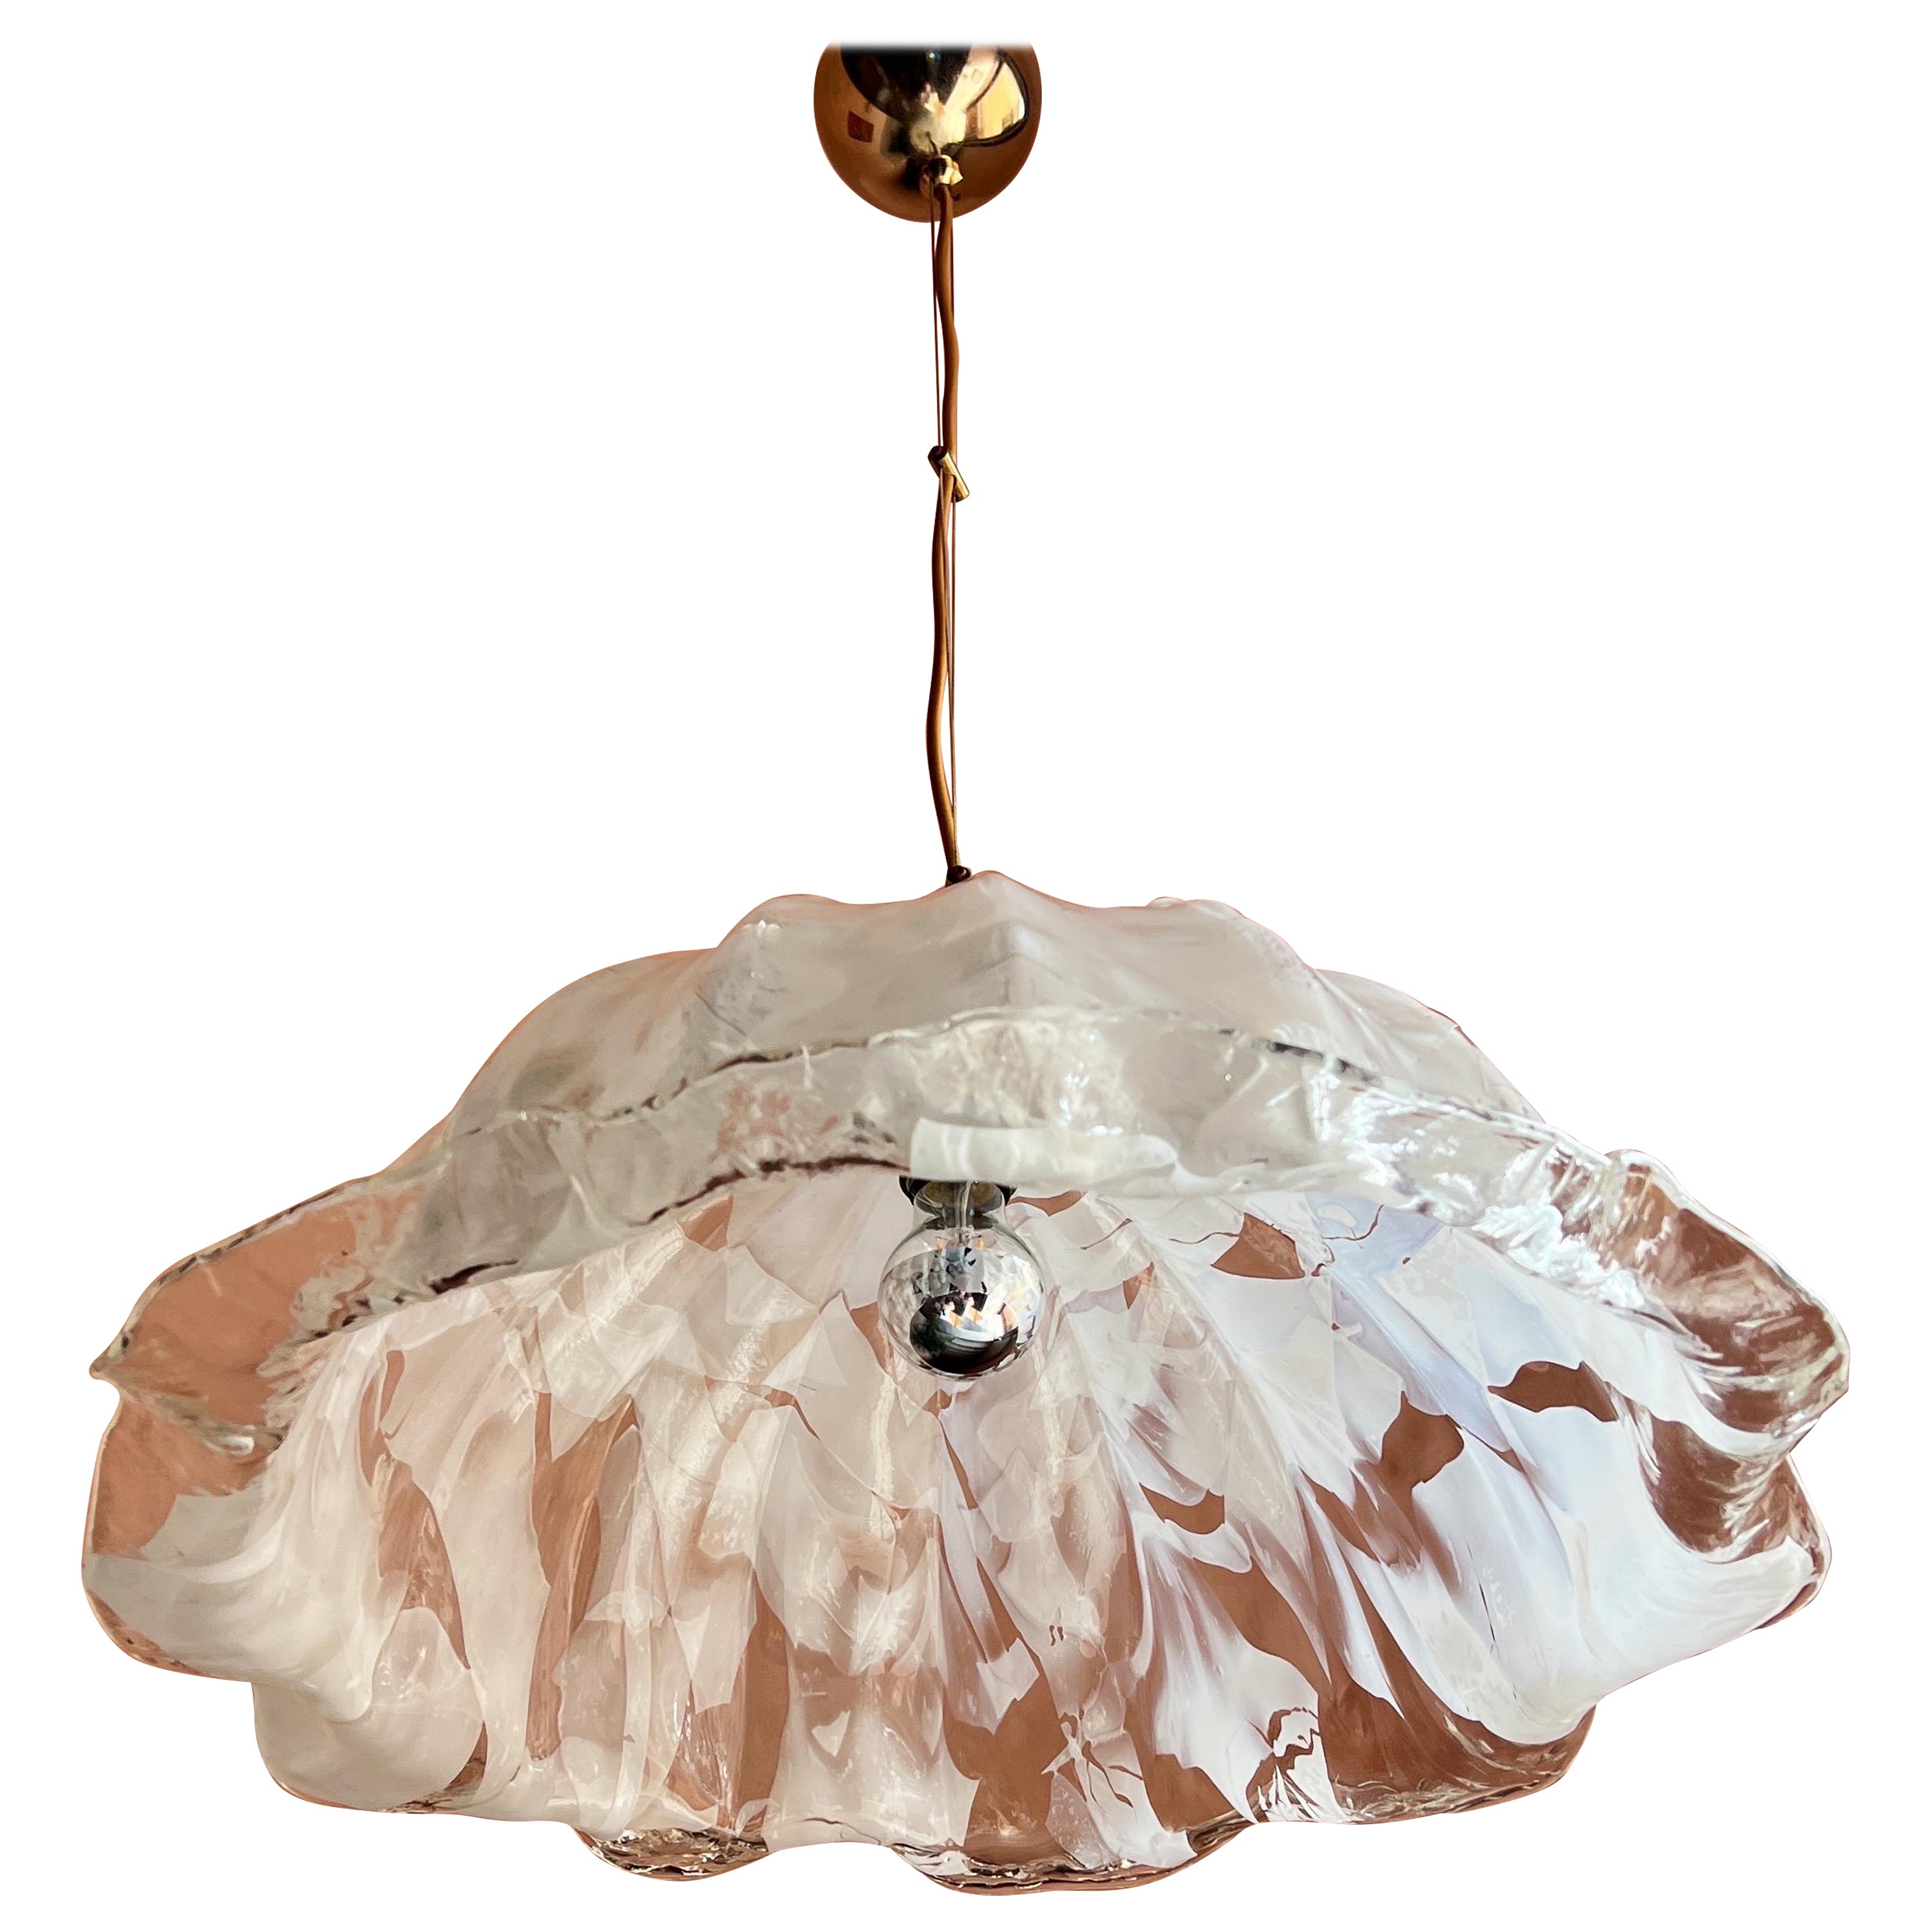 Exquisite Mid-Century Modern Murano glass pendant light by La Murrina